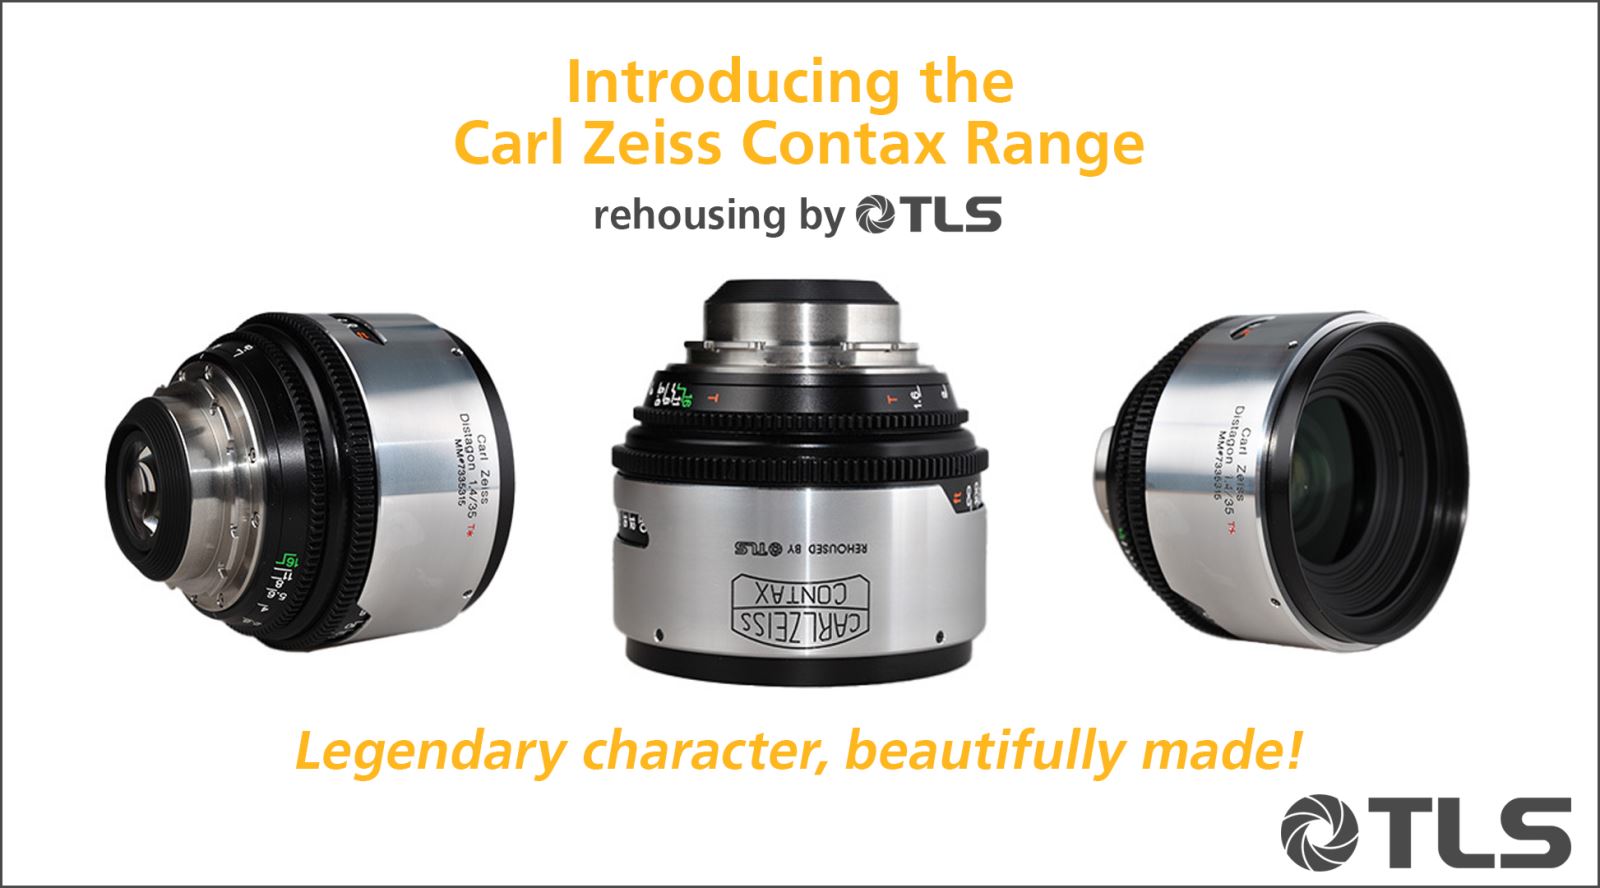 TLS: Carl Zeiss Contax Range